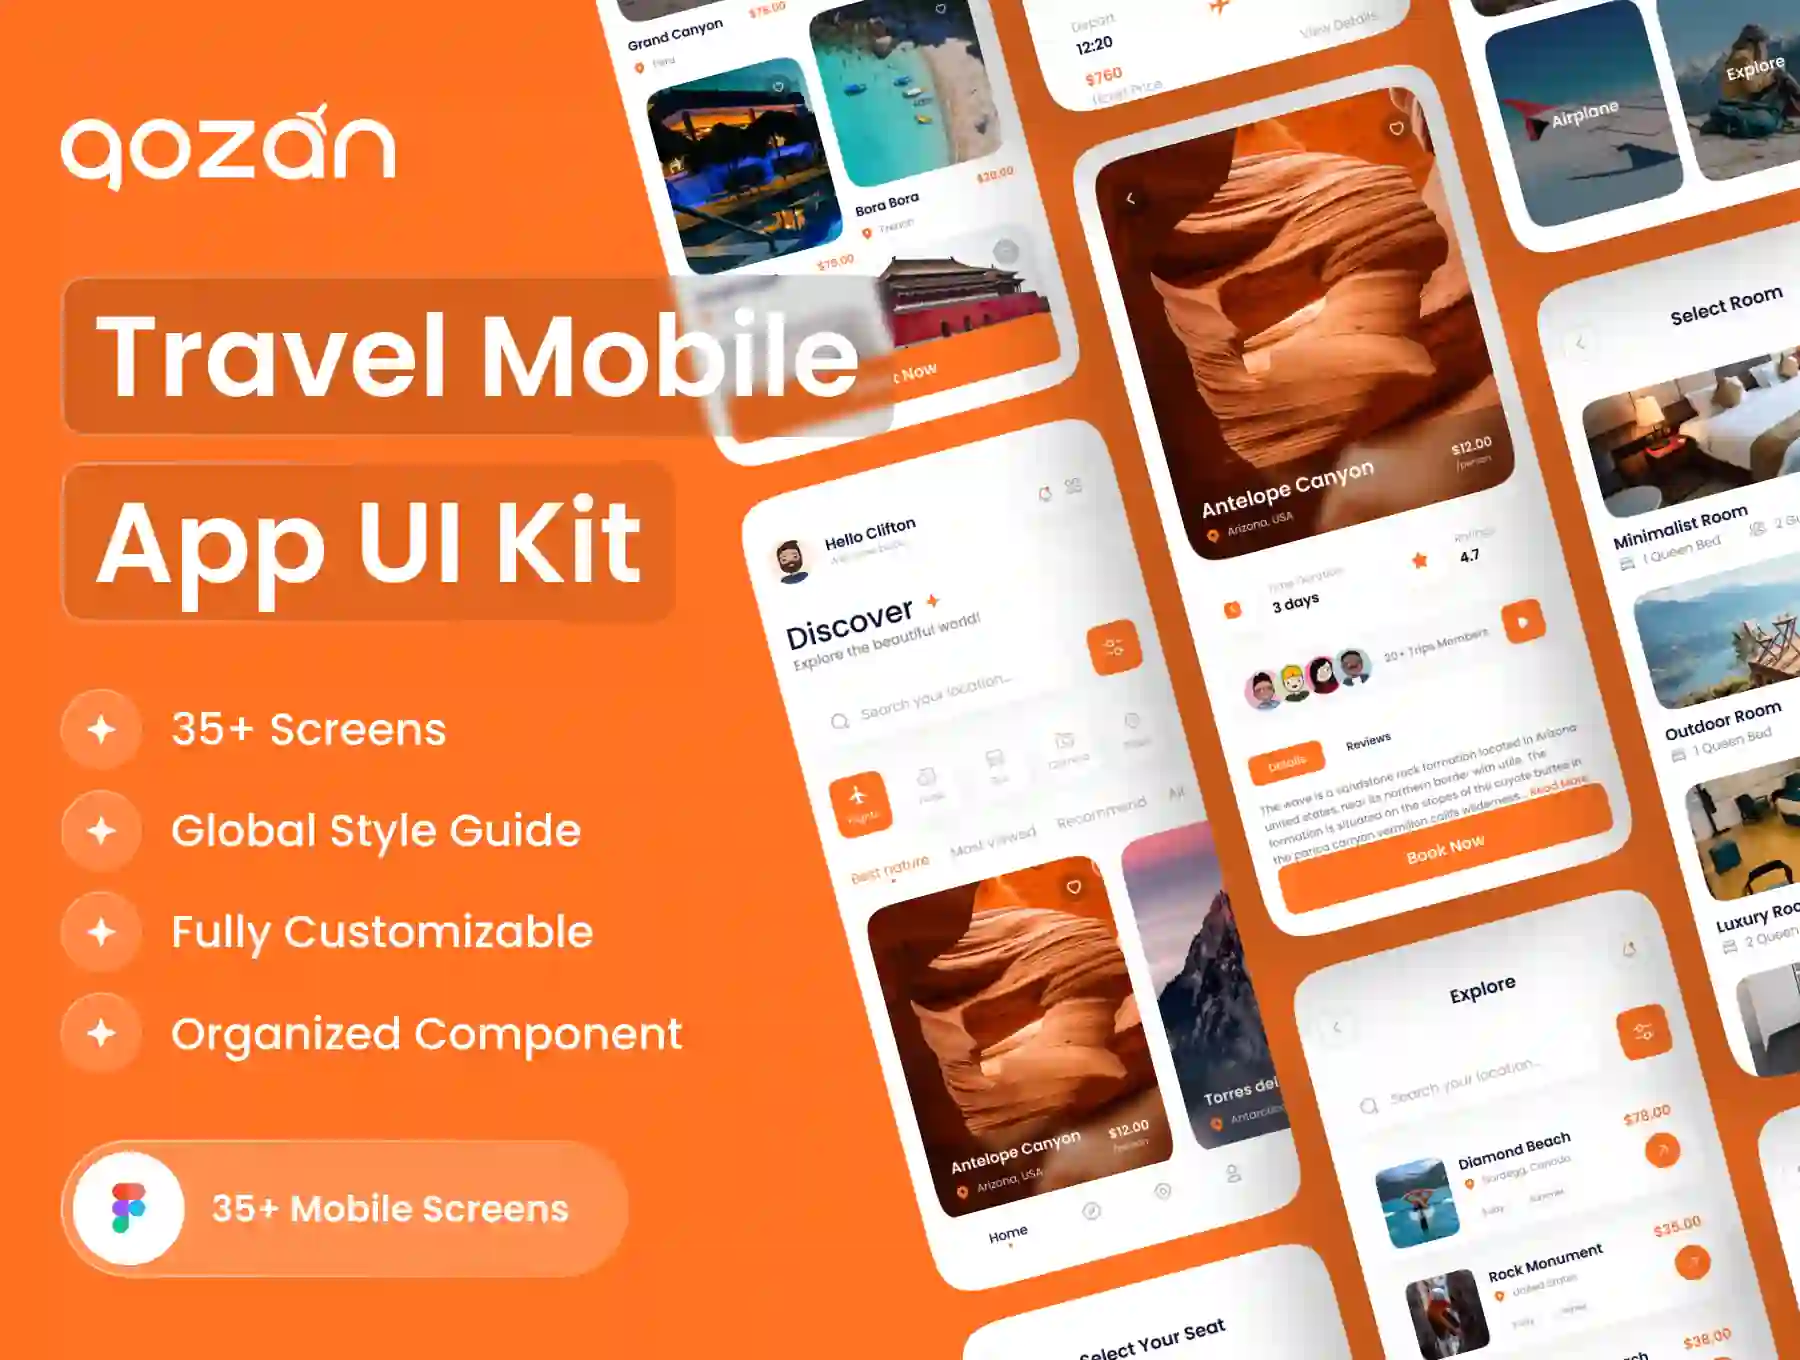 Gozan - Travel Mobile App UI Kit